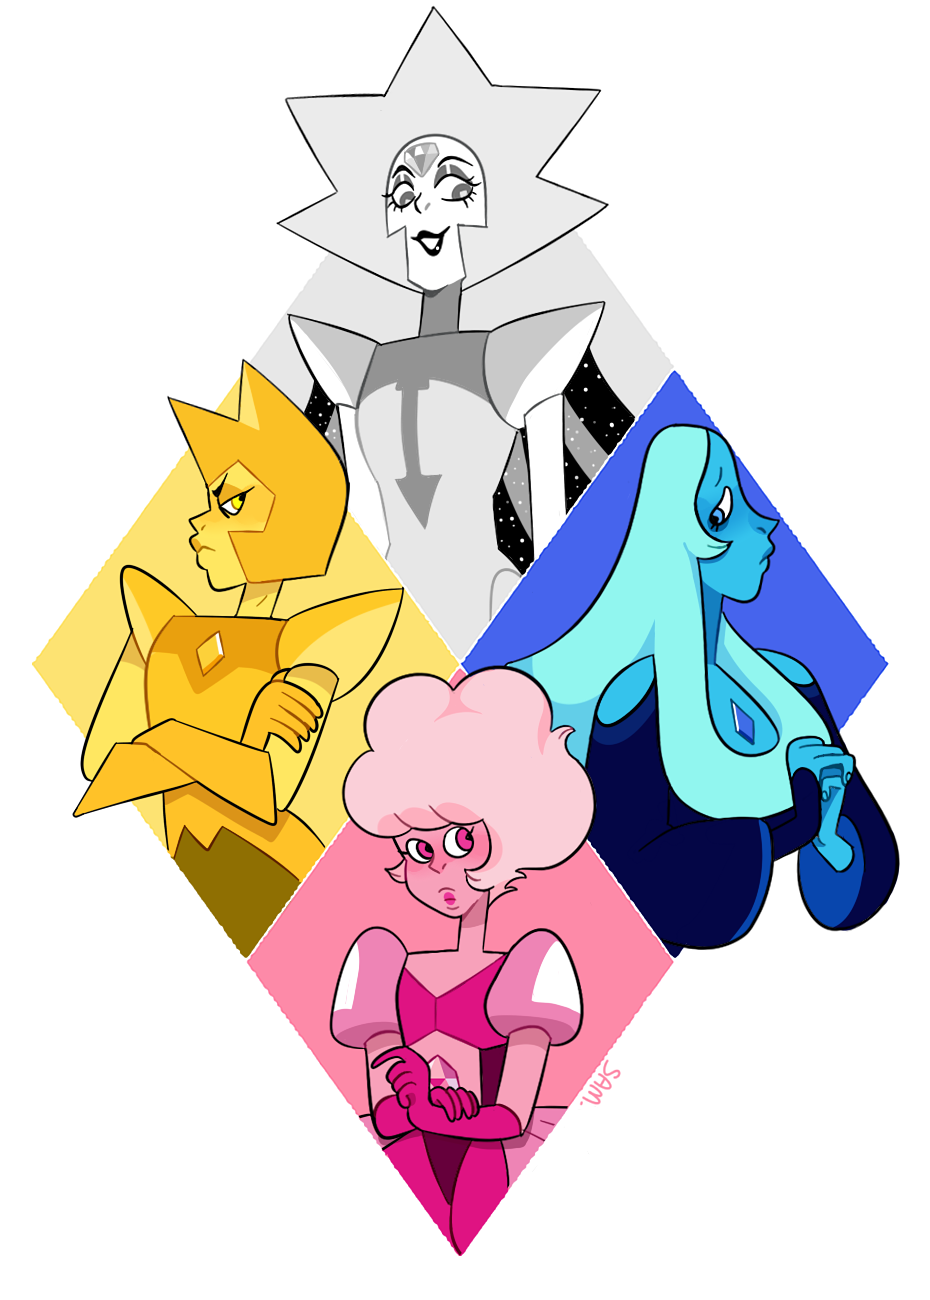 Diamonds